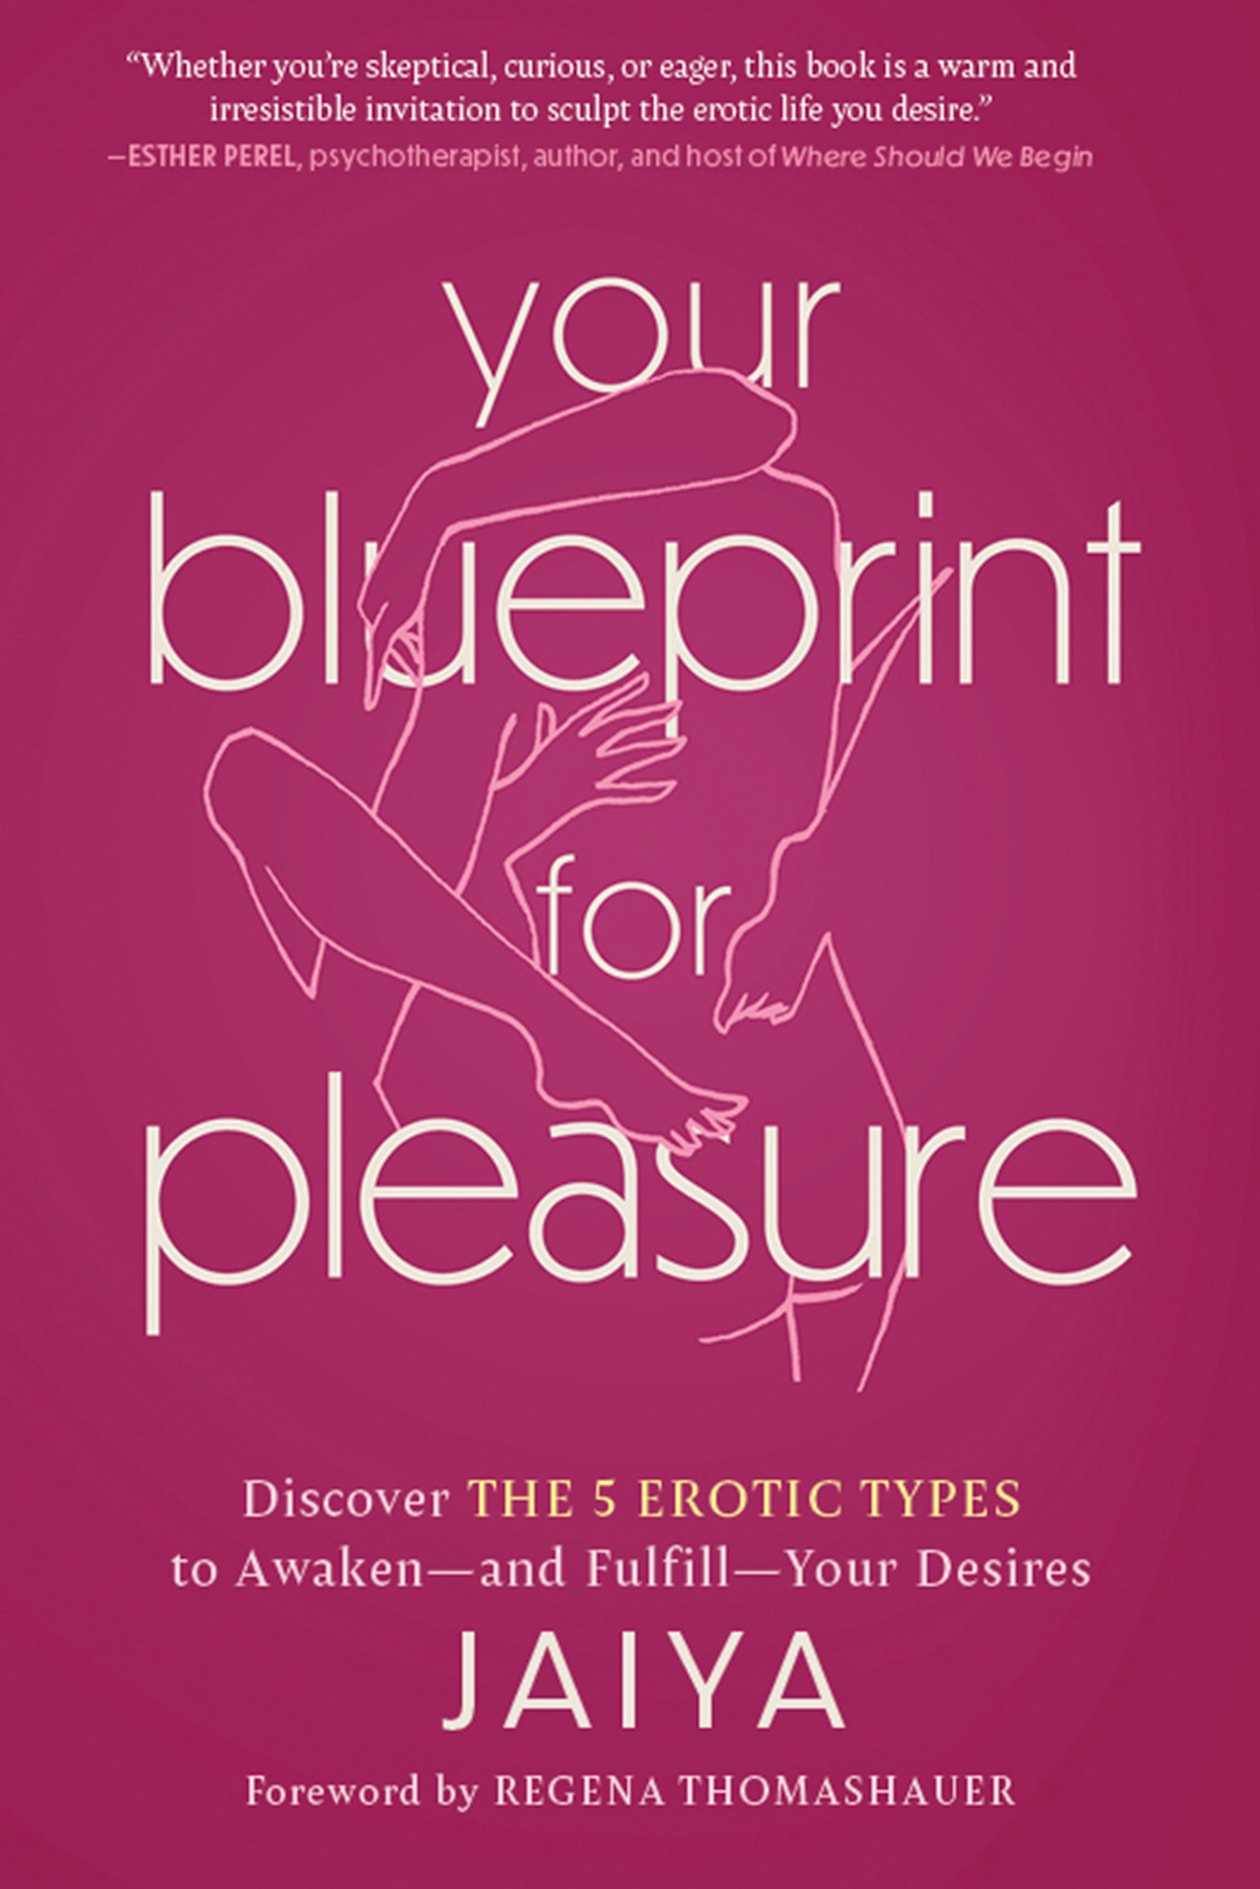 best new books sexual wellness for women goop jaiya Netflix erotic blueprint pleasure desire sexuality